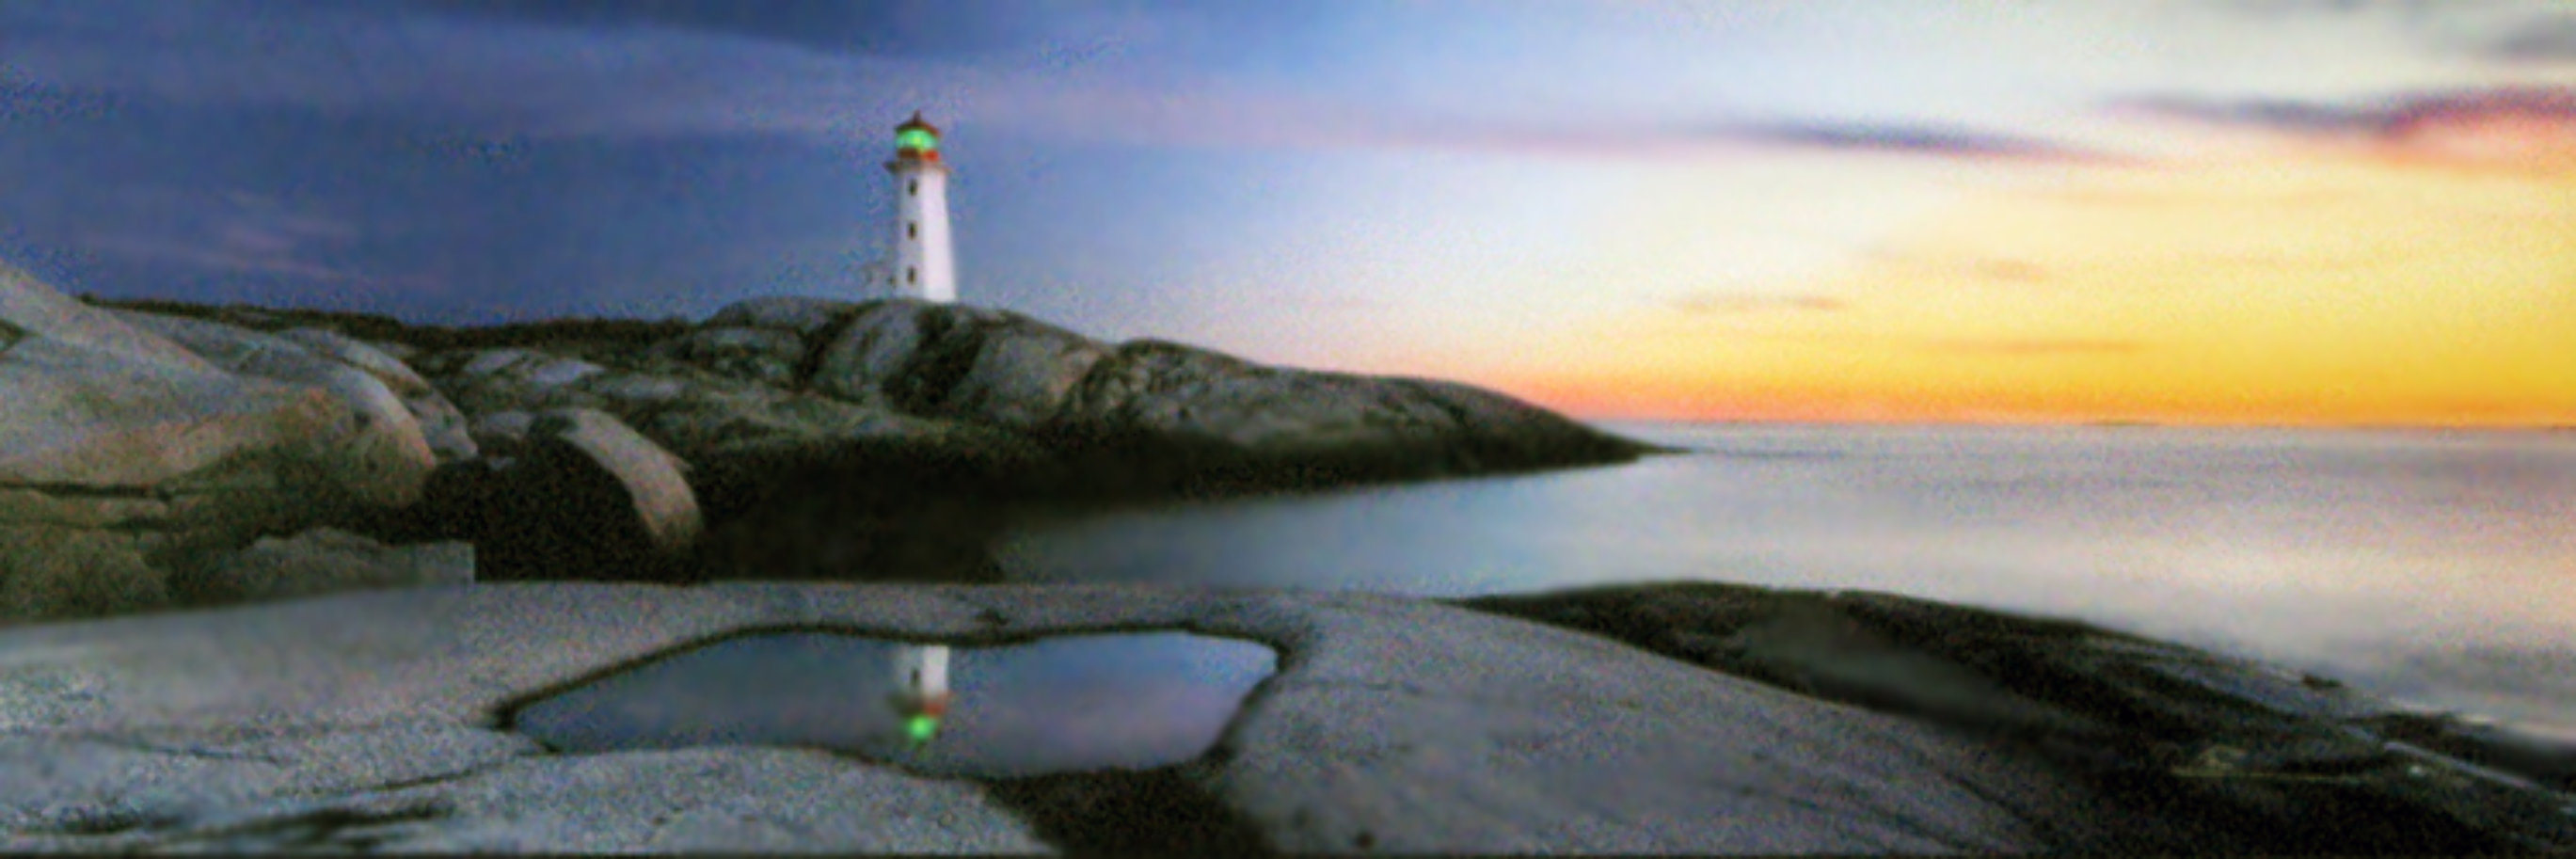 Atlantic Reflections (Peggy's Cove, Nova Scotia) 1.5M Panorama by Peter Lik